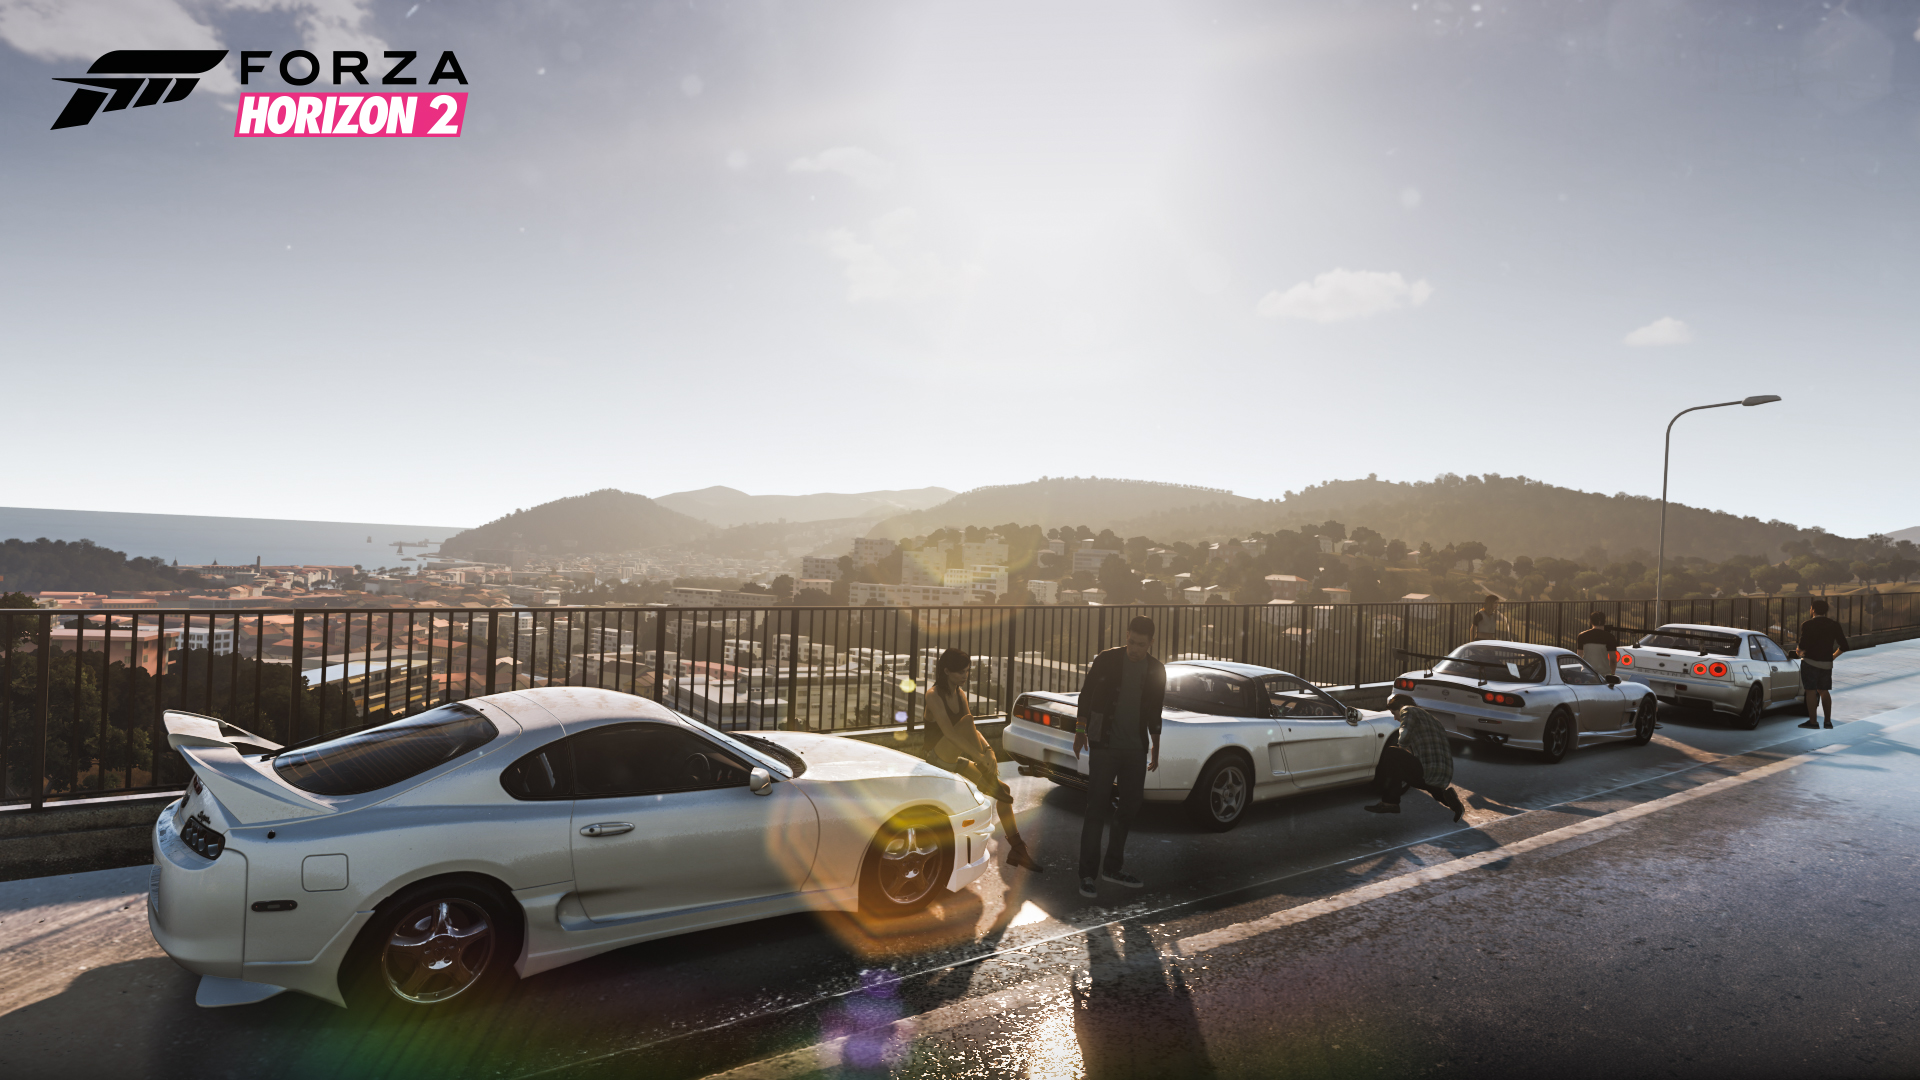 Forza Horizon 2 ADD-ON BONUS DLC CODE ONLY (XBOX ONE) - ADD-ON